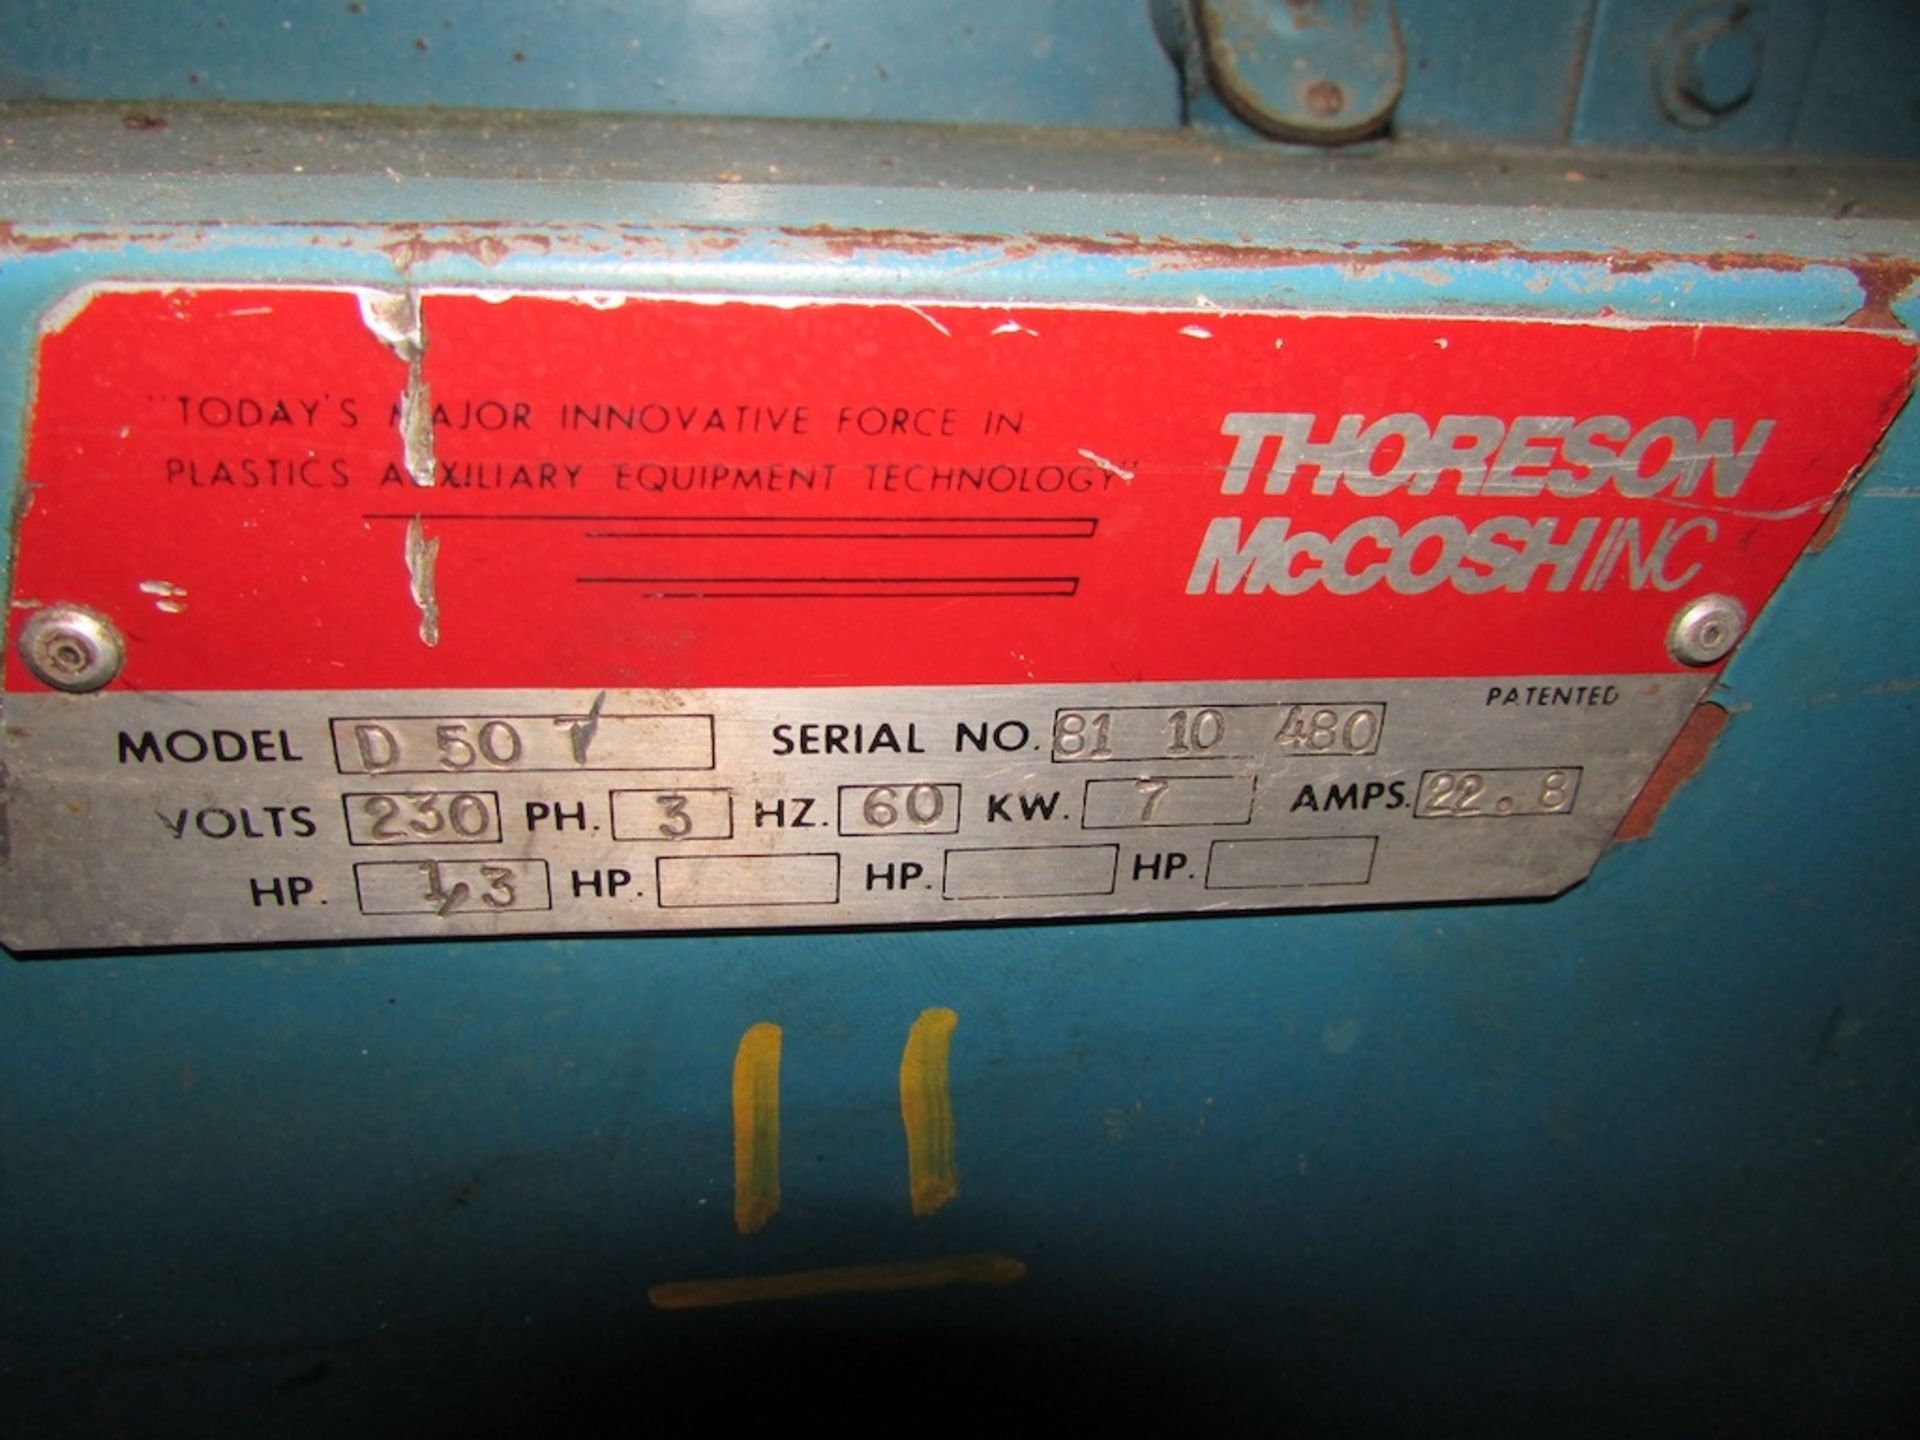 (1) Thoreson McCosh Inc. Model D 50 T Material Dryer - Image 7 of 8